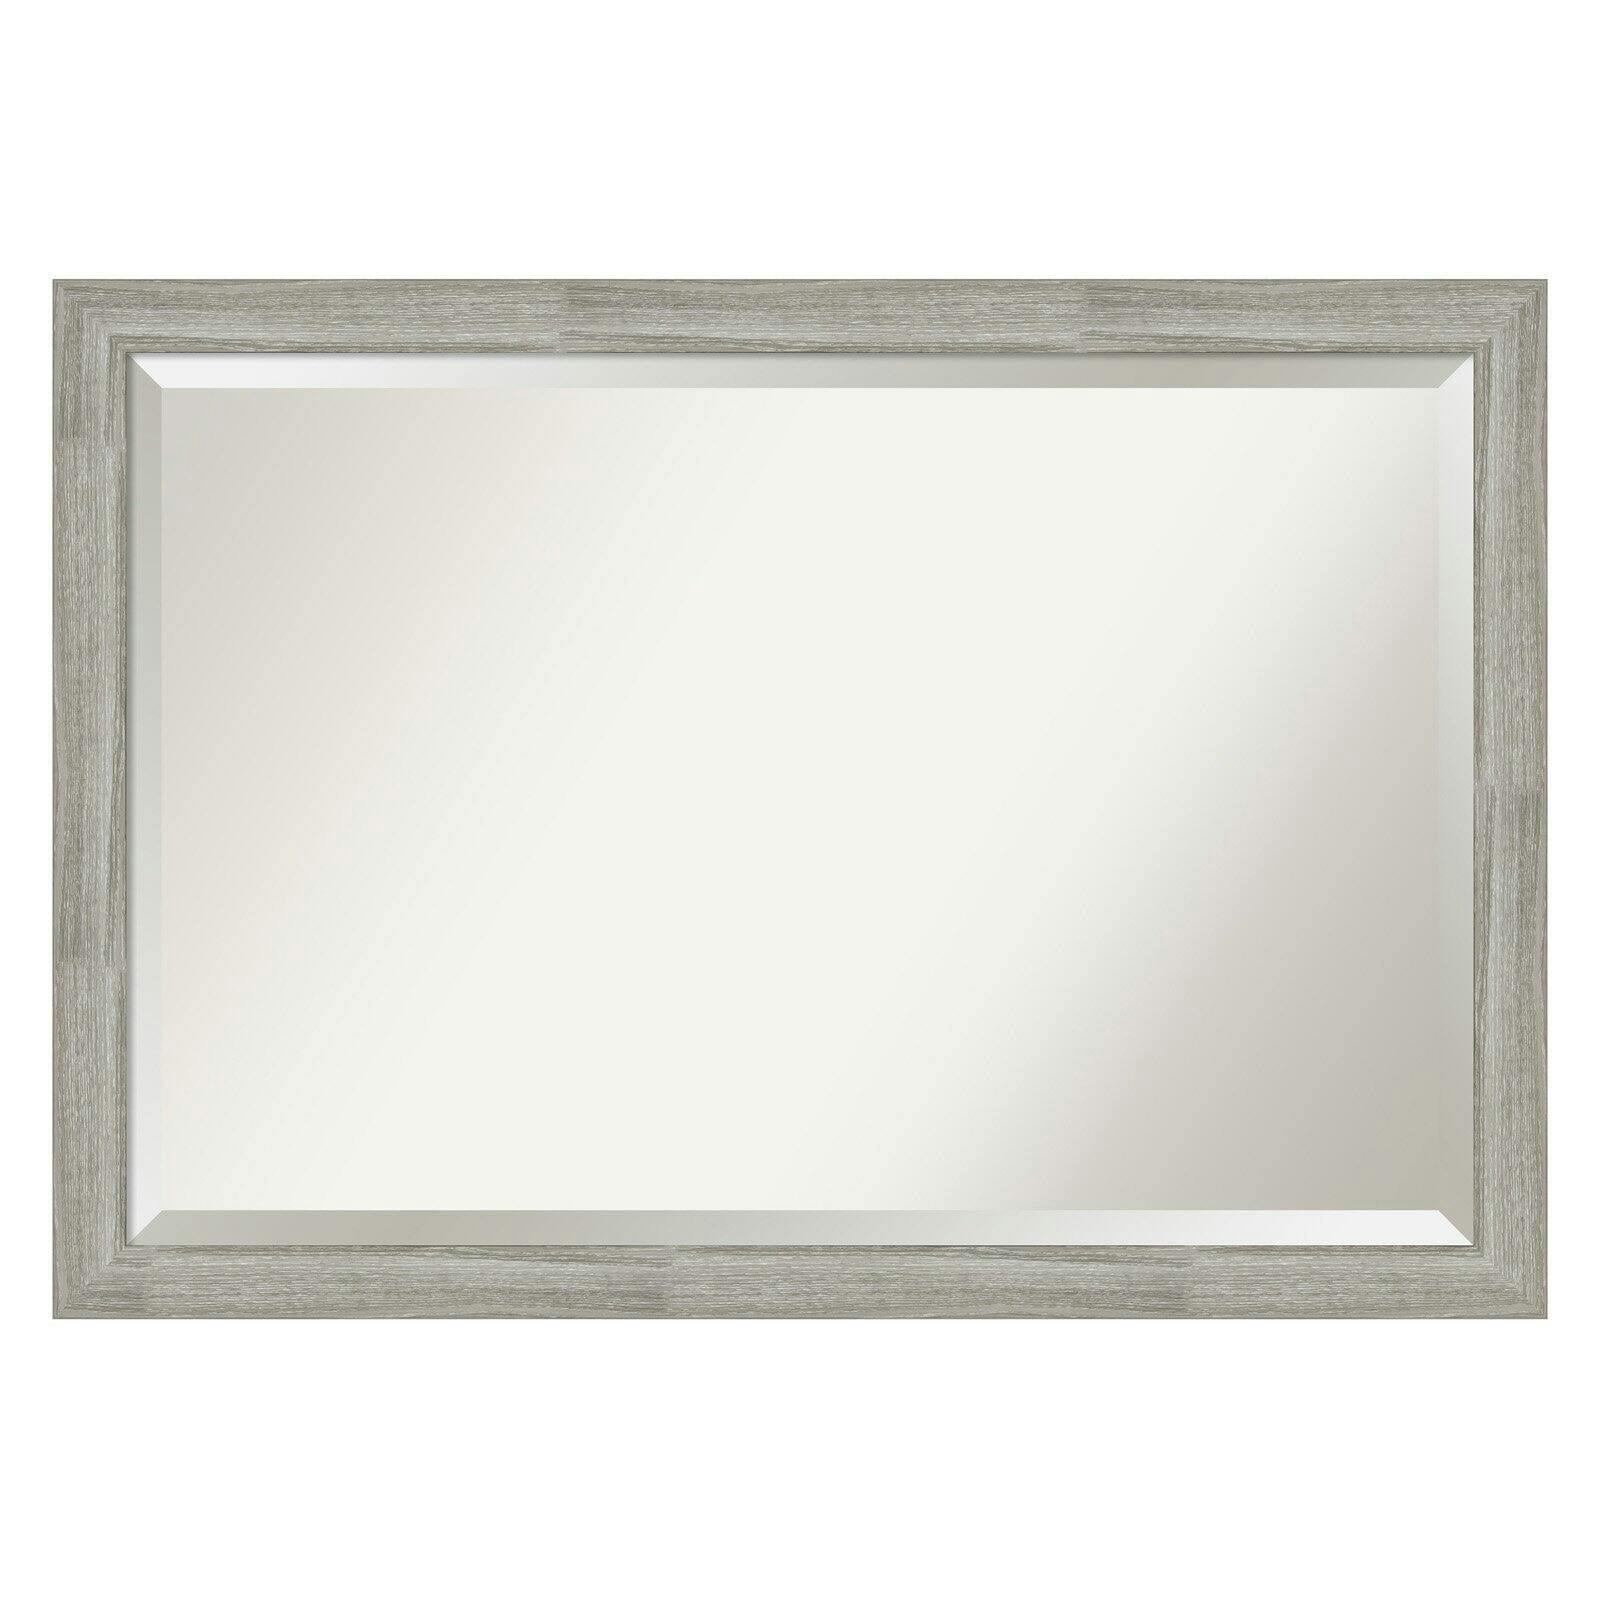 Rustic Greywash Woodgrain Rectangular Bathroom Vanity Mirror